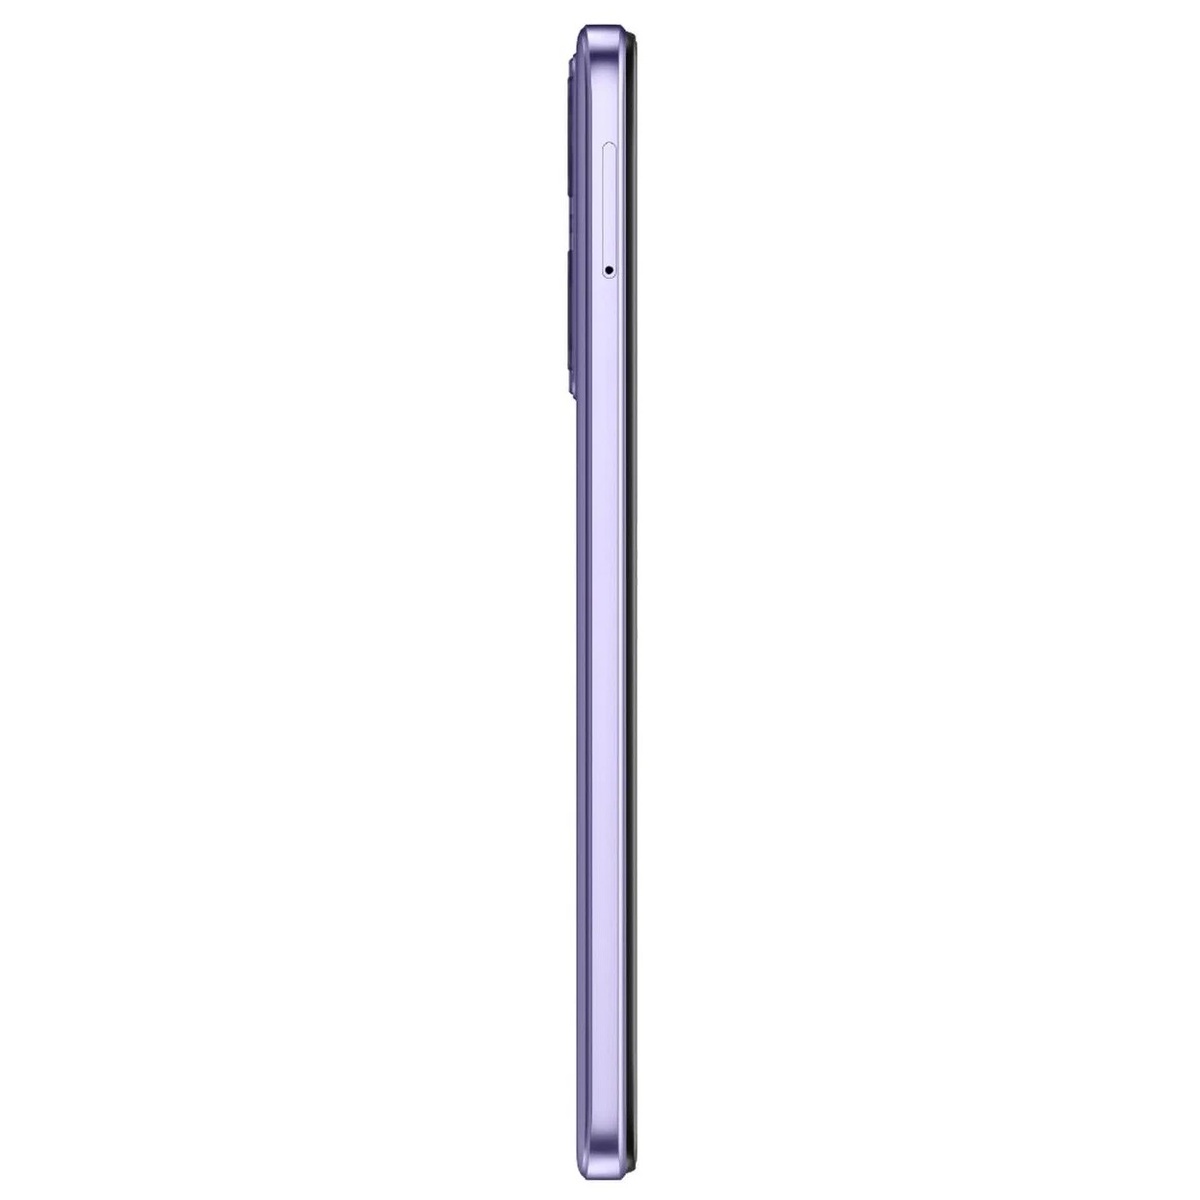 Смартфон Tecno Pop 6 Pro 2/32Gb (Цвет: Purple)